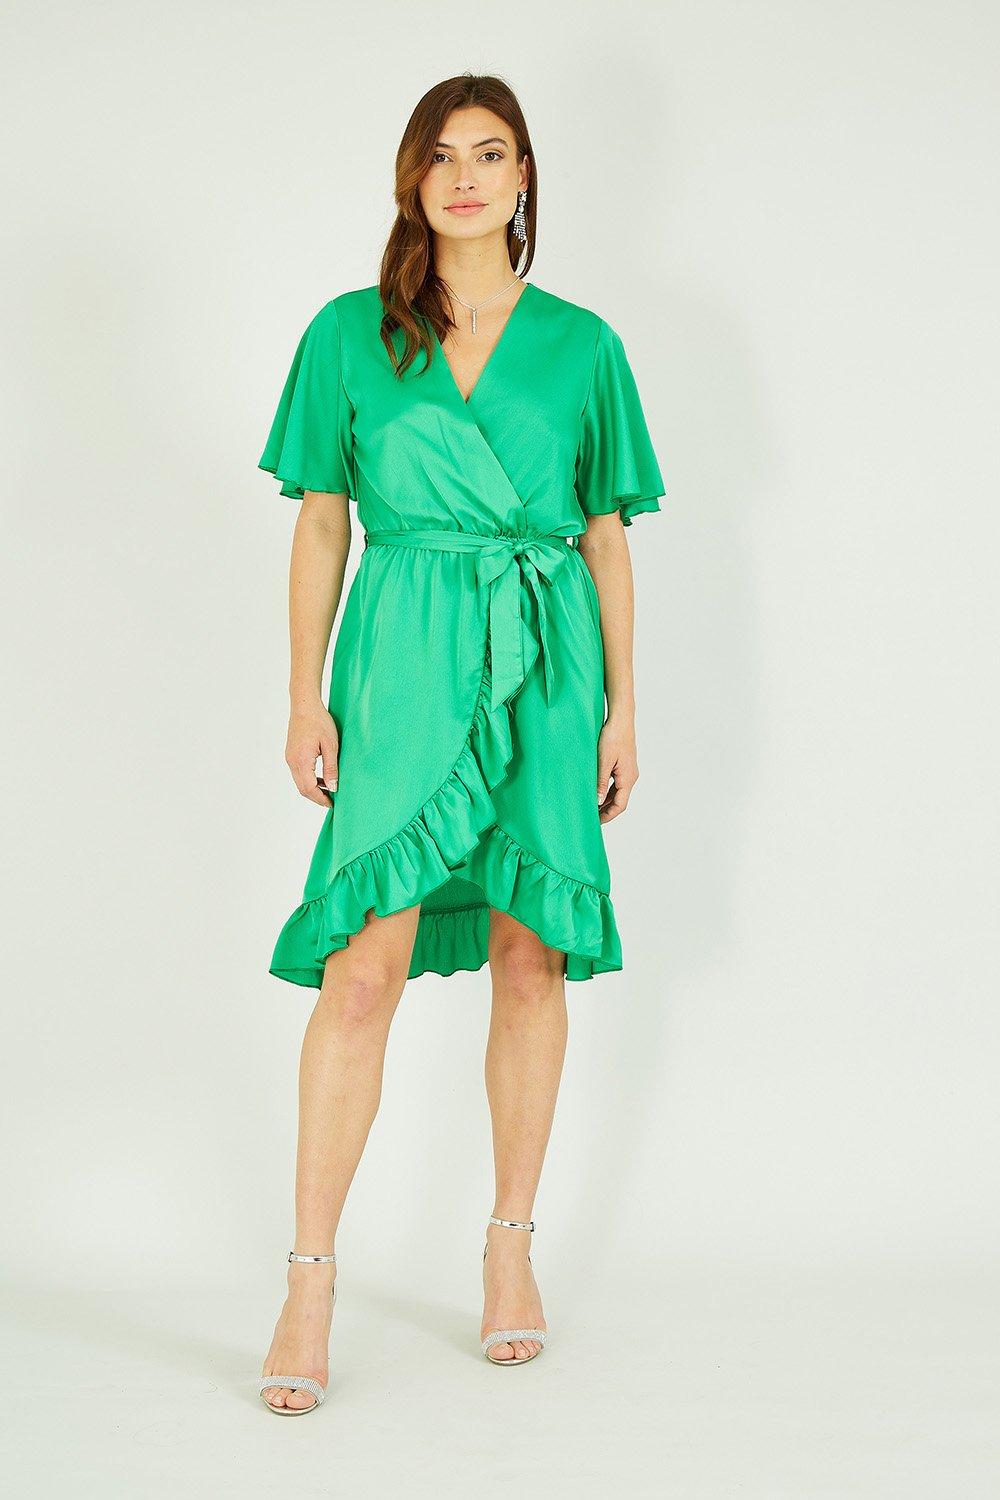 Green Satin Wrap Dress